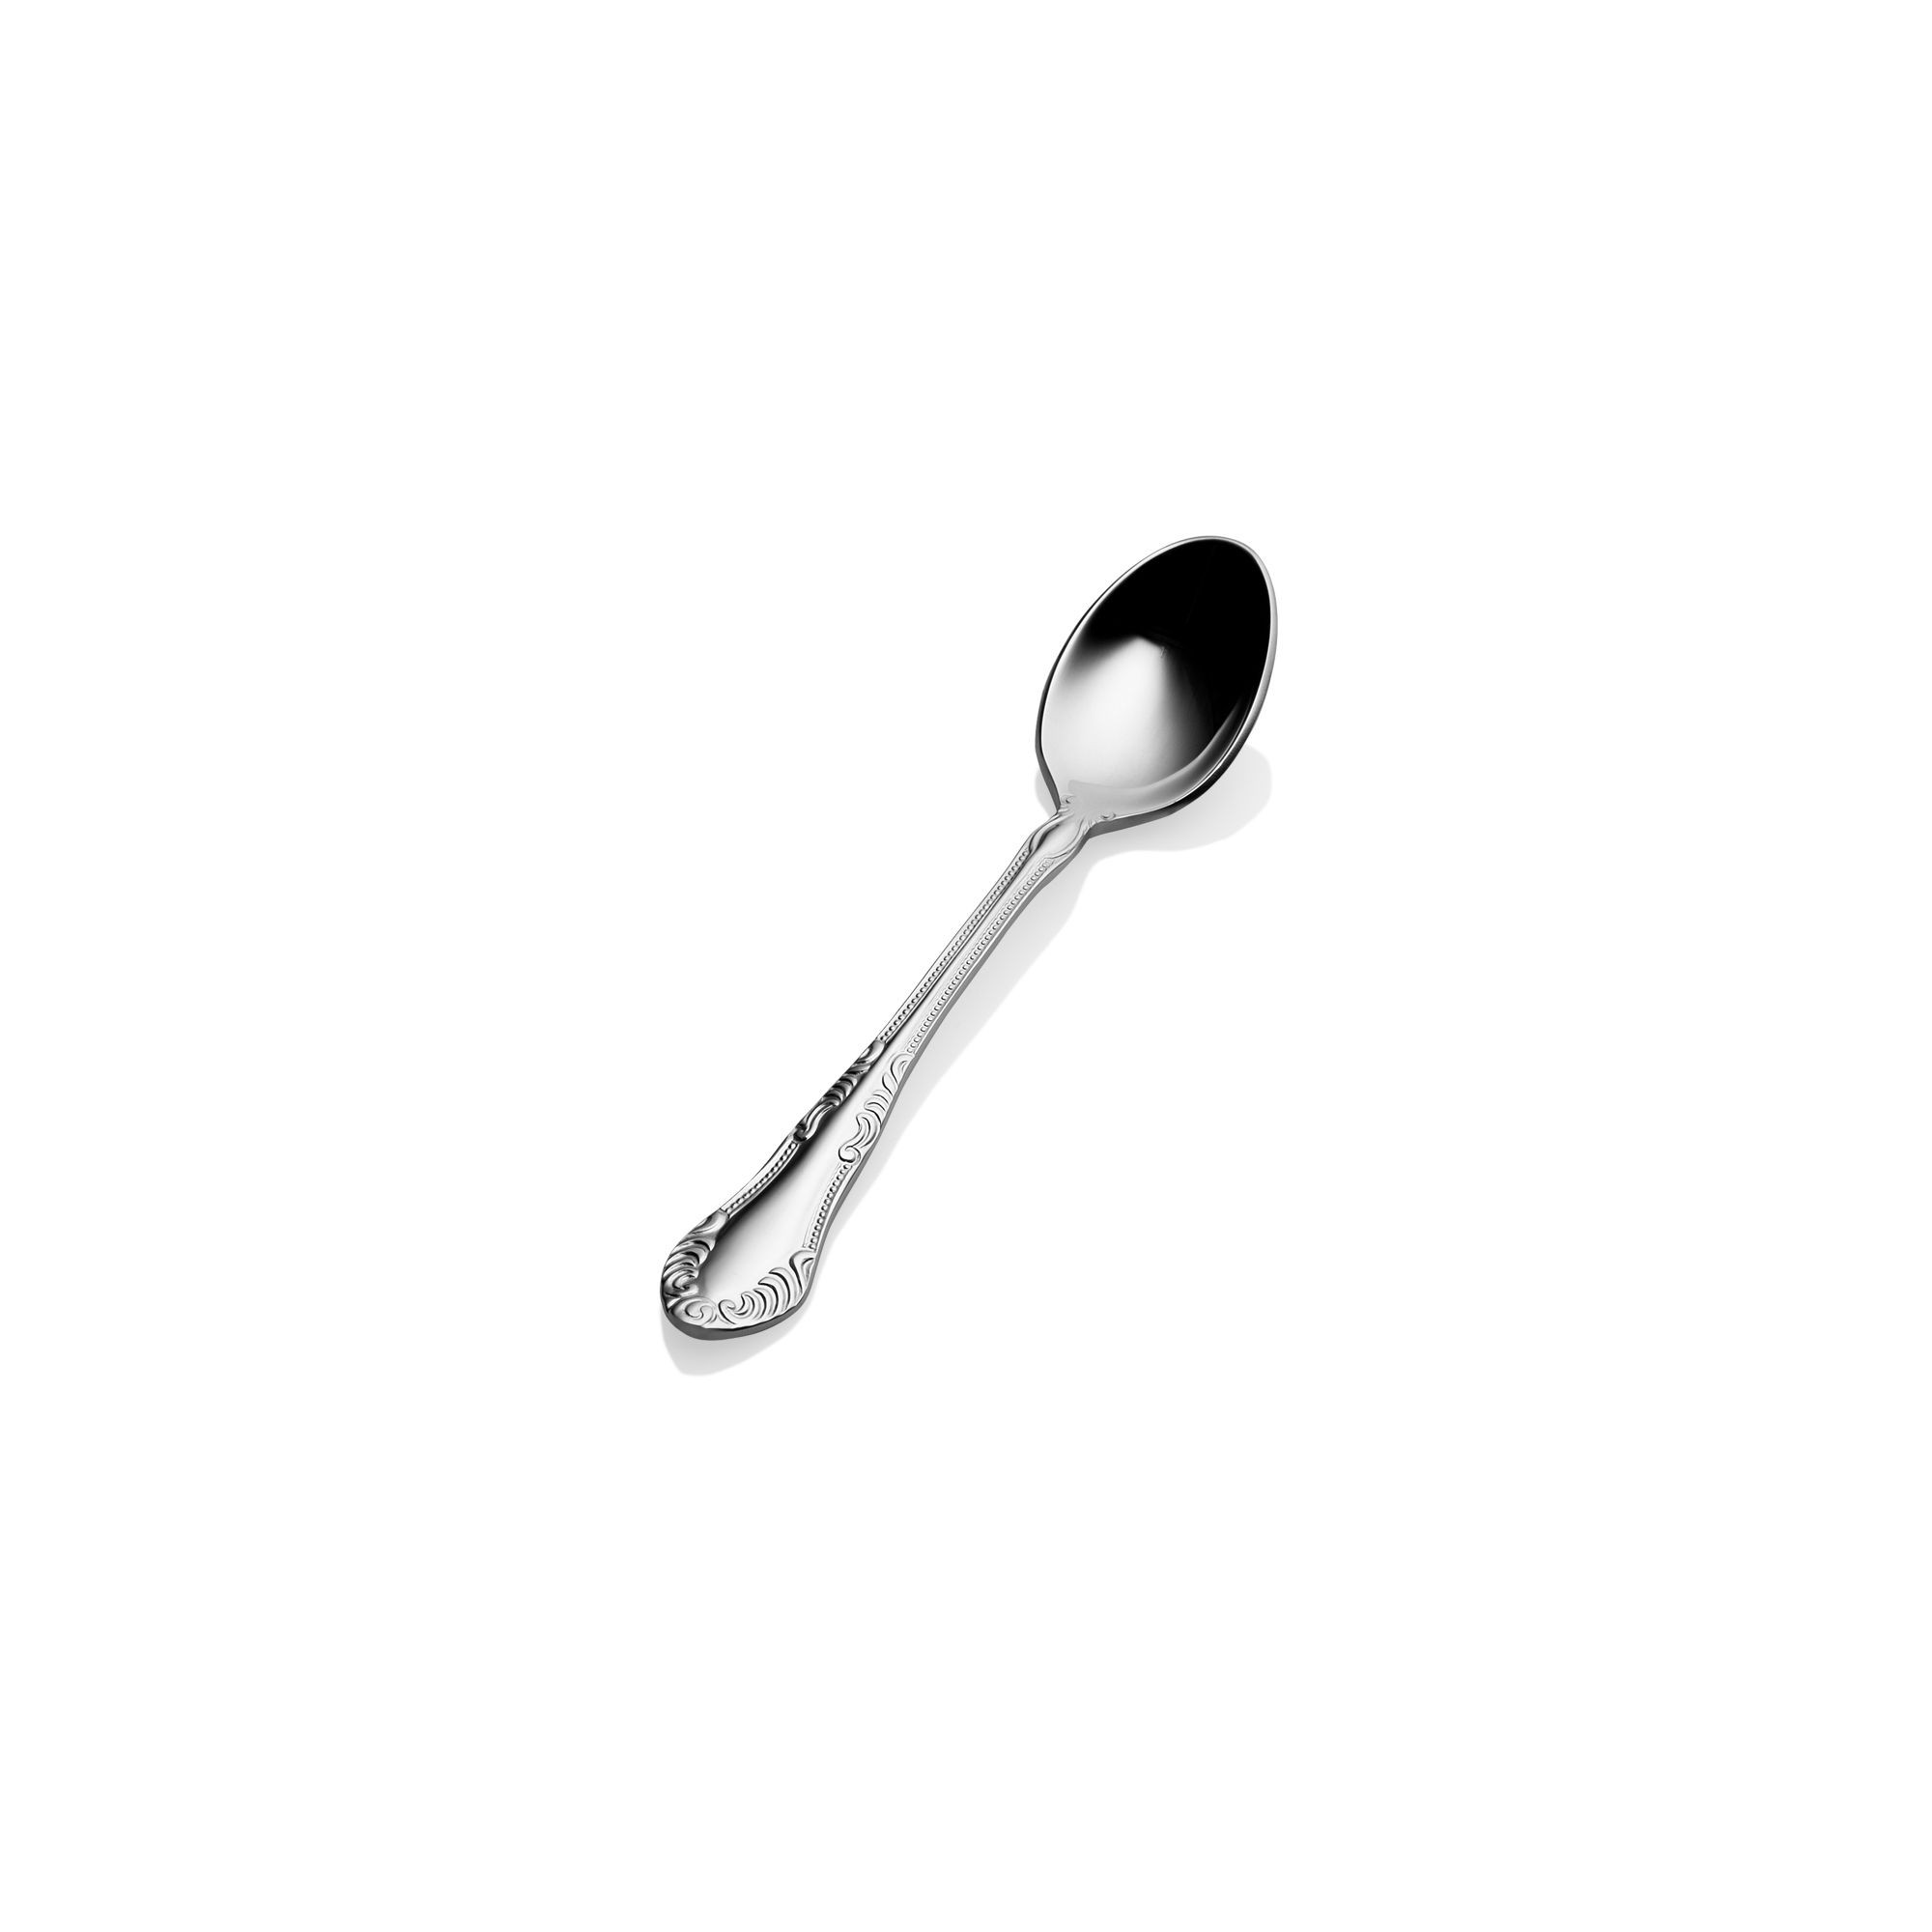 Bon Chef S2516 Elegant 18/8 Stainless Steel Demitasse Spoon